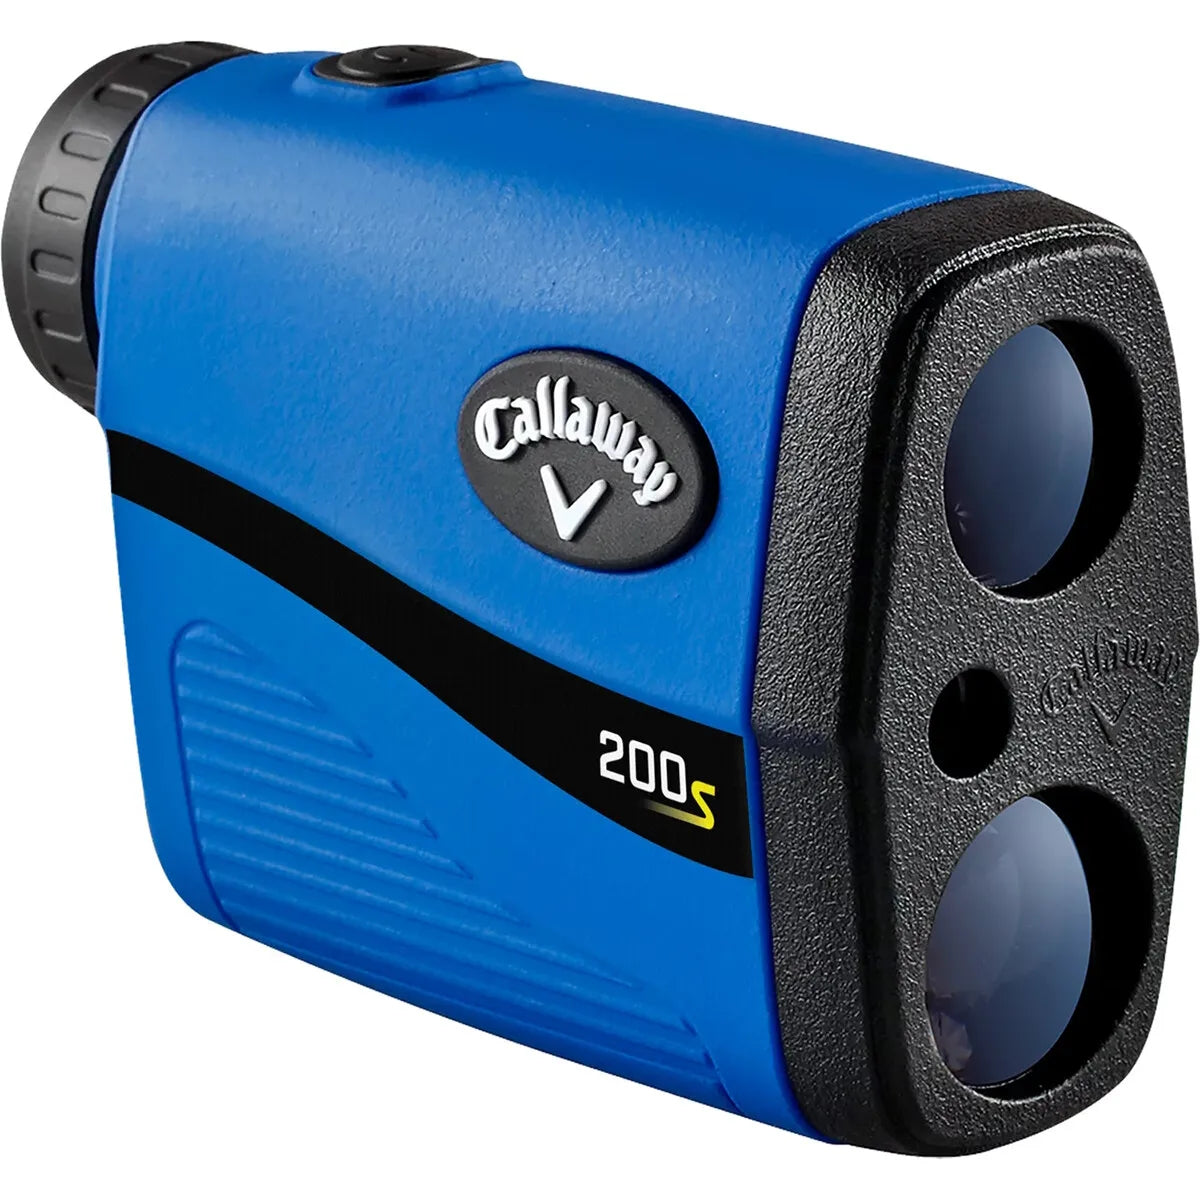 Callaway 200S Laser Rangefinder Golf GPS